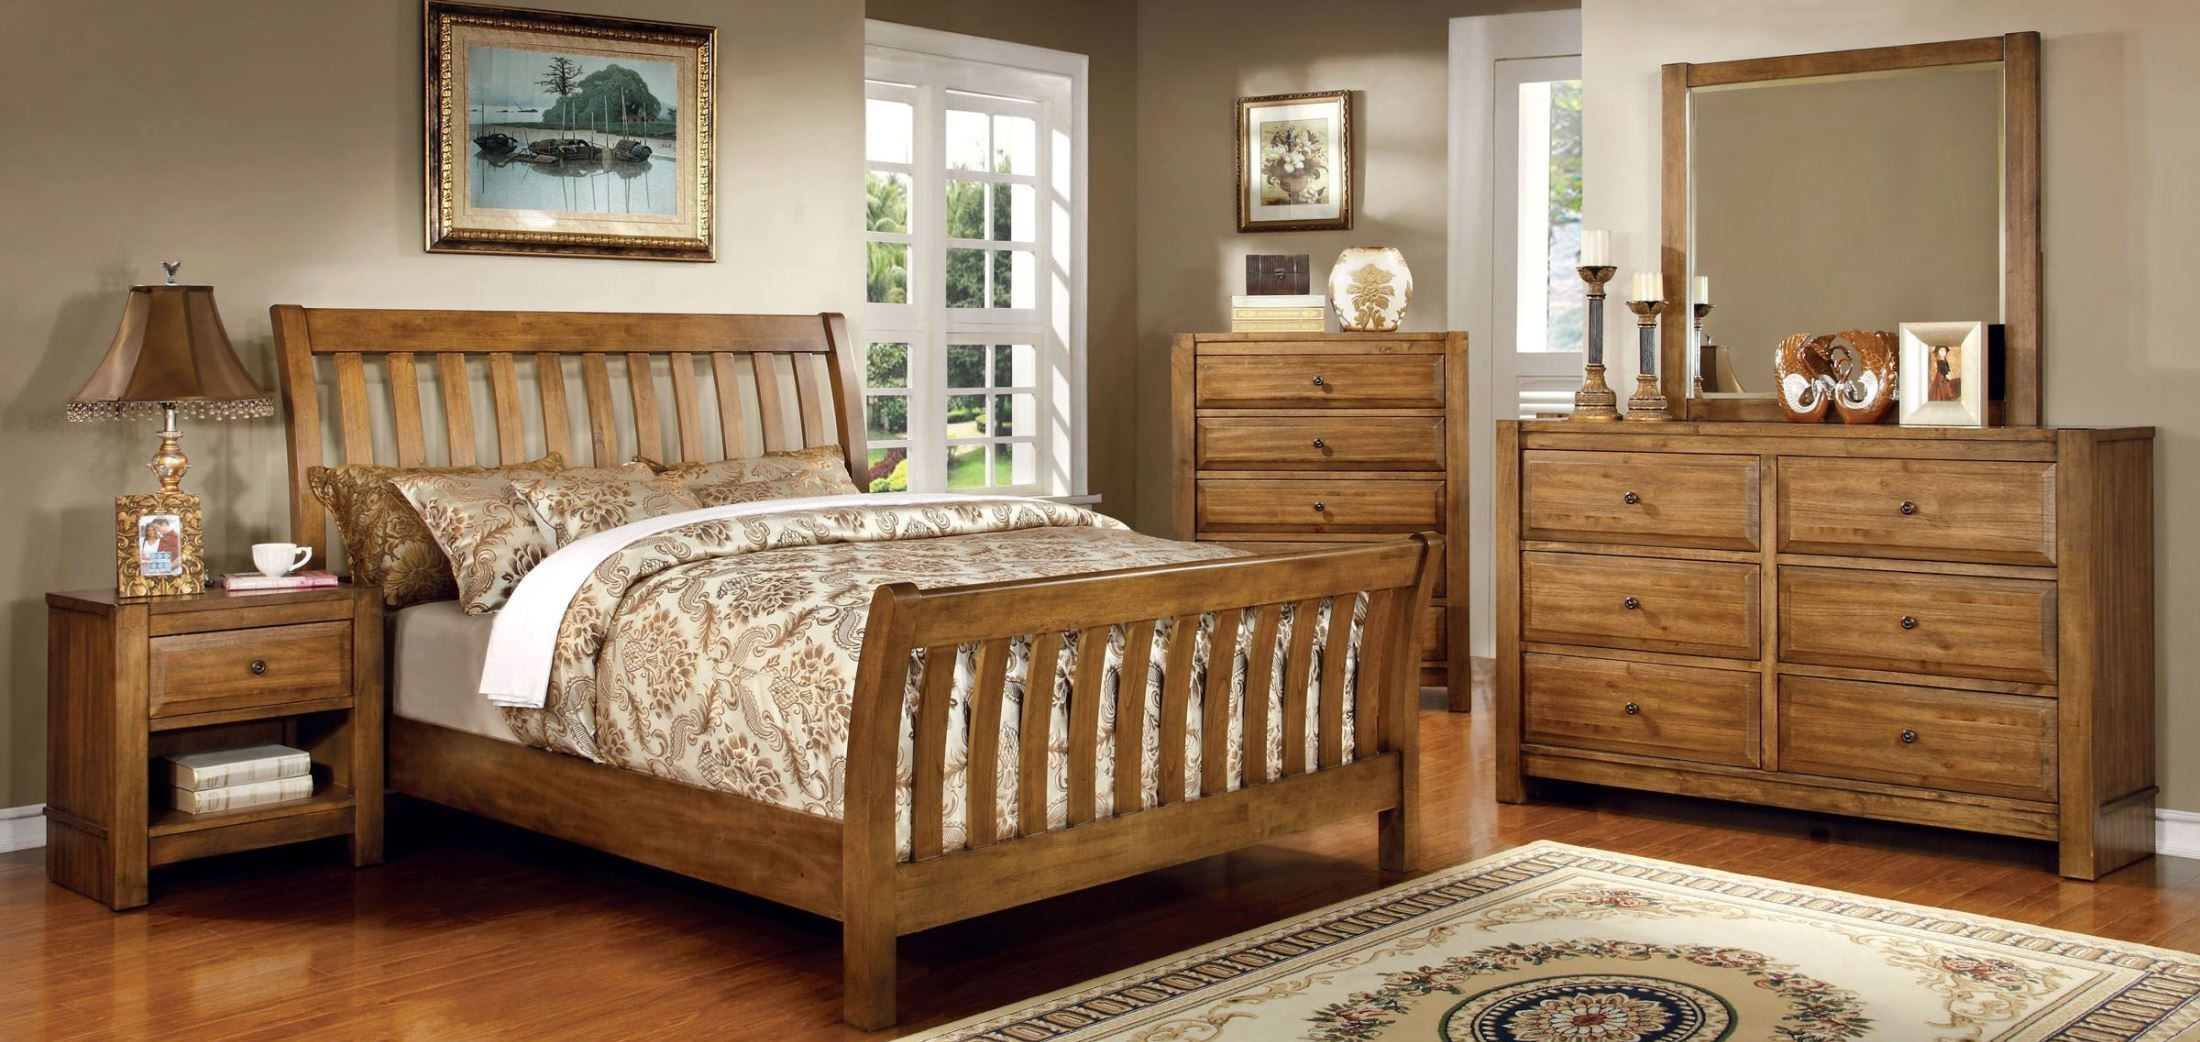 Rustic Bedroom Furniture Sets
 Conrad Rustic Oak Sleigh Bedroom Set from Furniture of